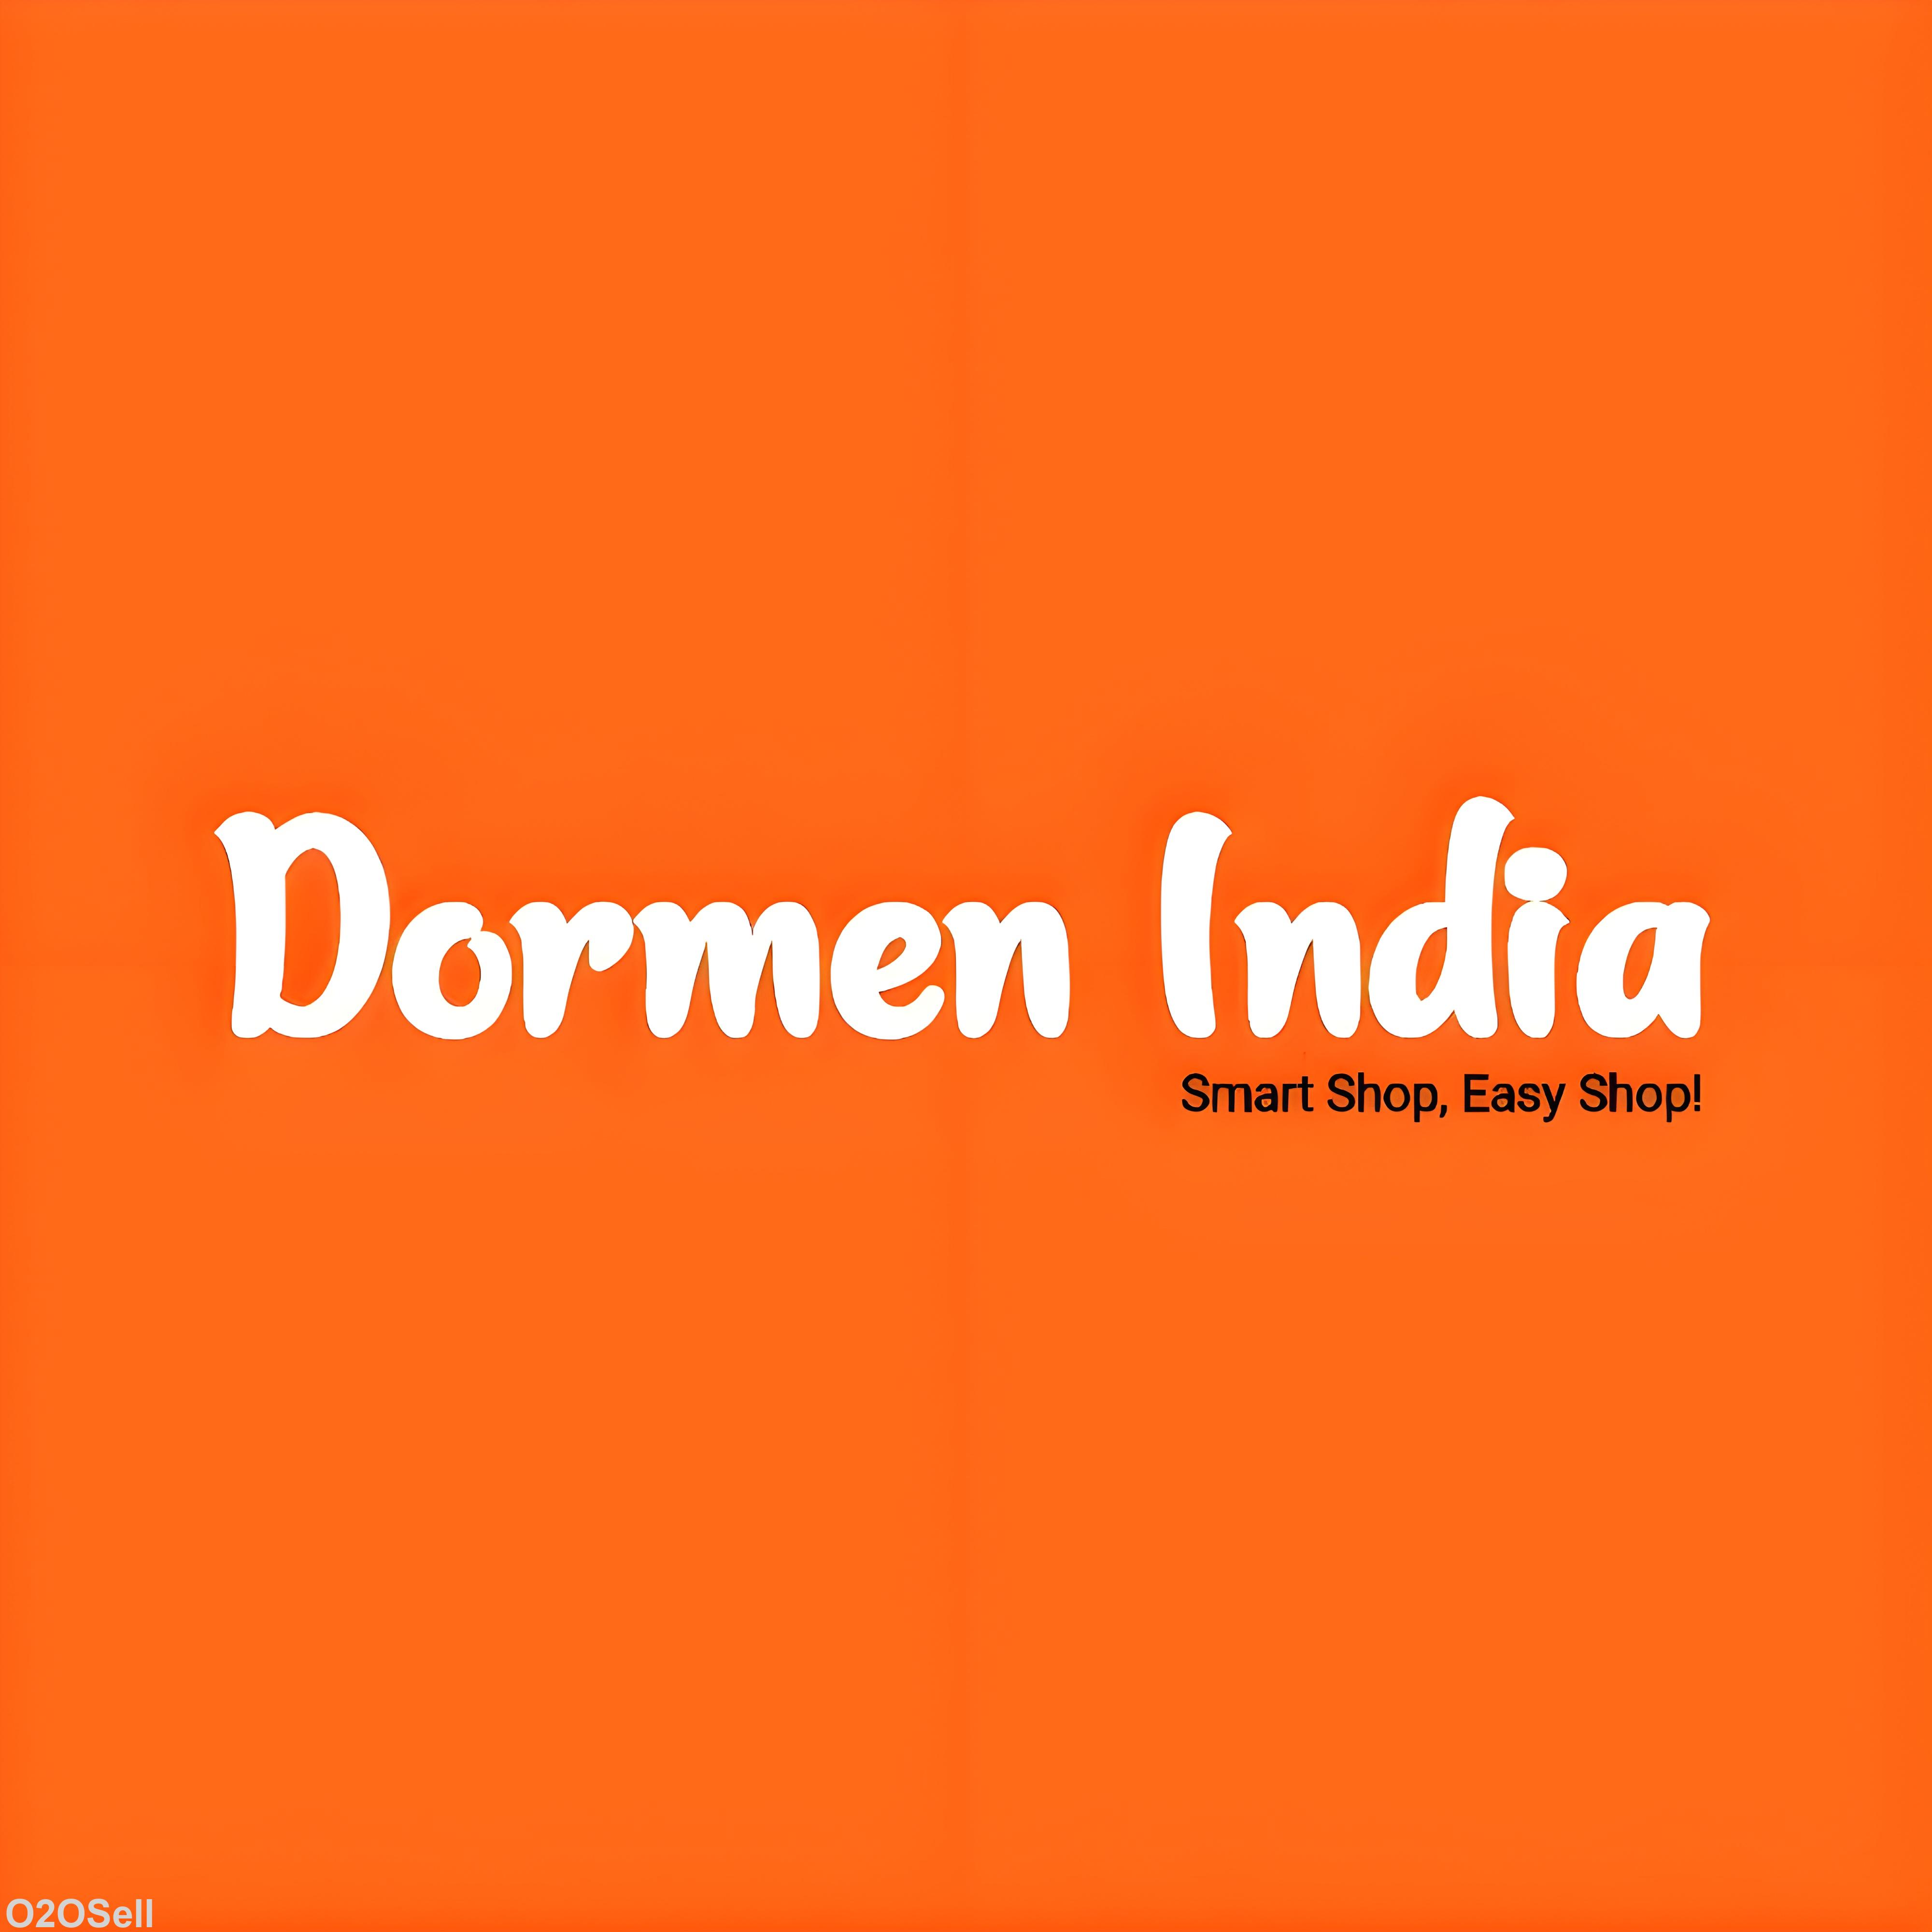 Dormen India - Shop Smart, Shop Easy! - Cover Image